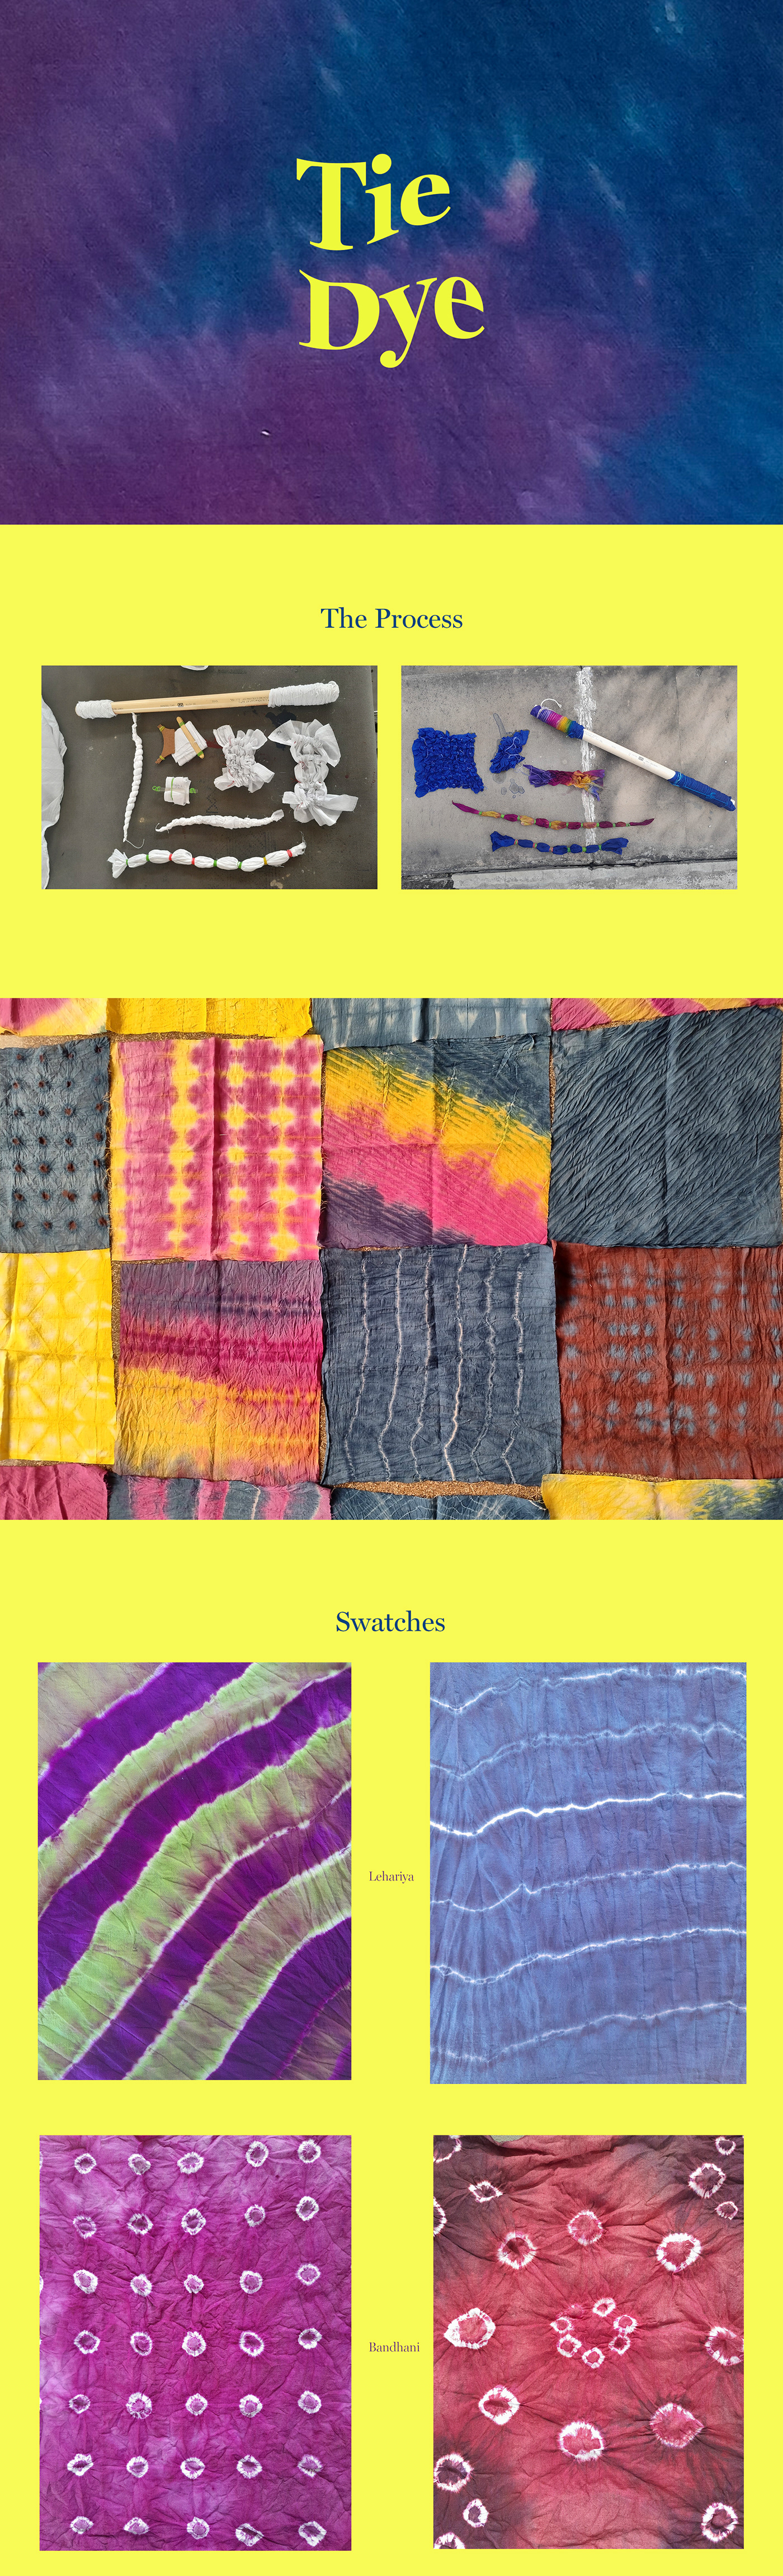 textile dyeing Tie Dye shibori surface ornamentation NID